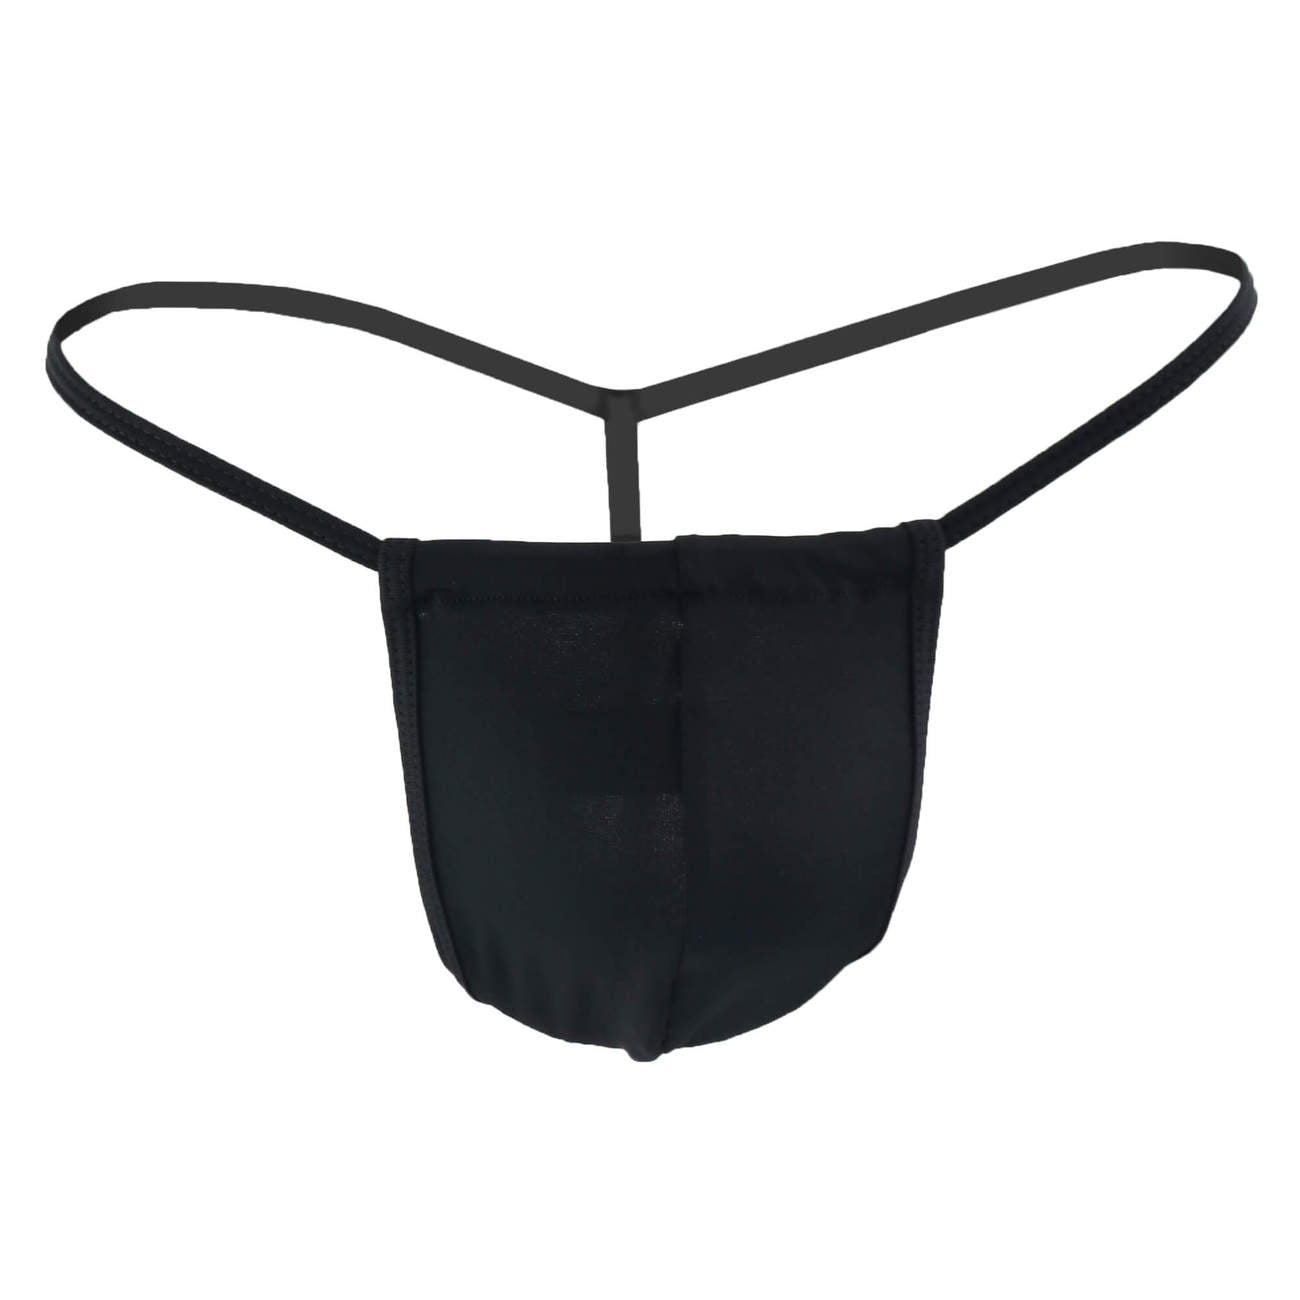 Bodysuit Thong Medis Net Black – PetitQ Underwear, Men's Sexy